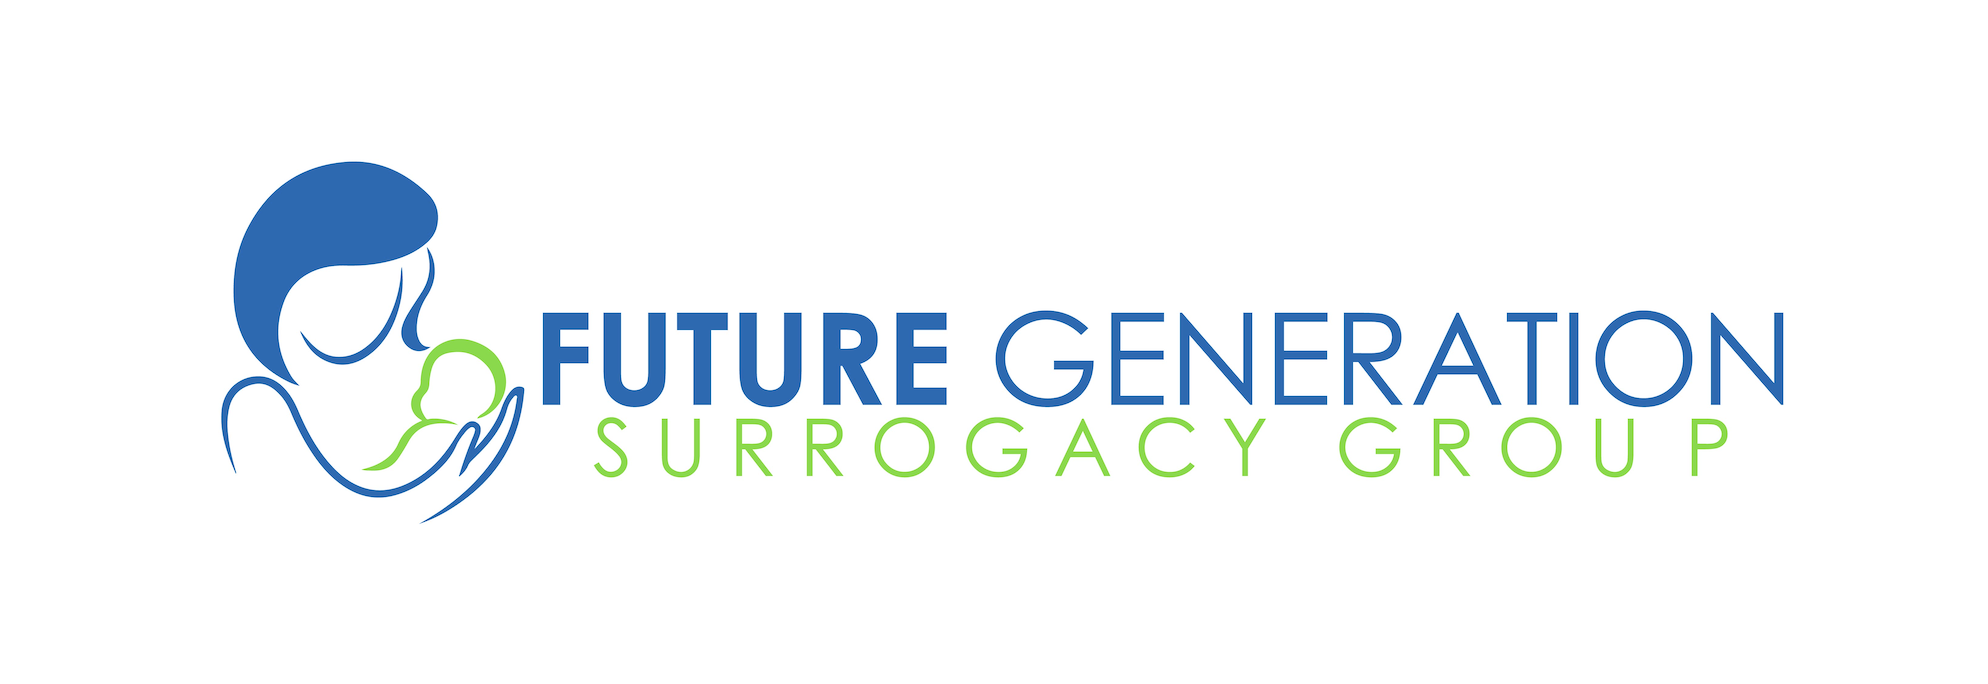 Future Generation Surrogacy